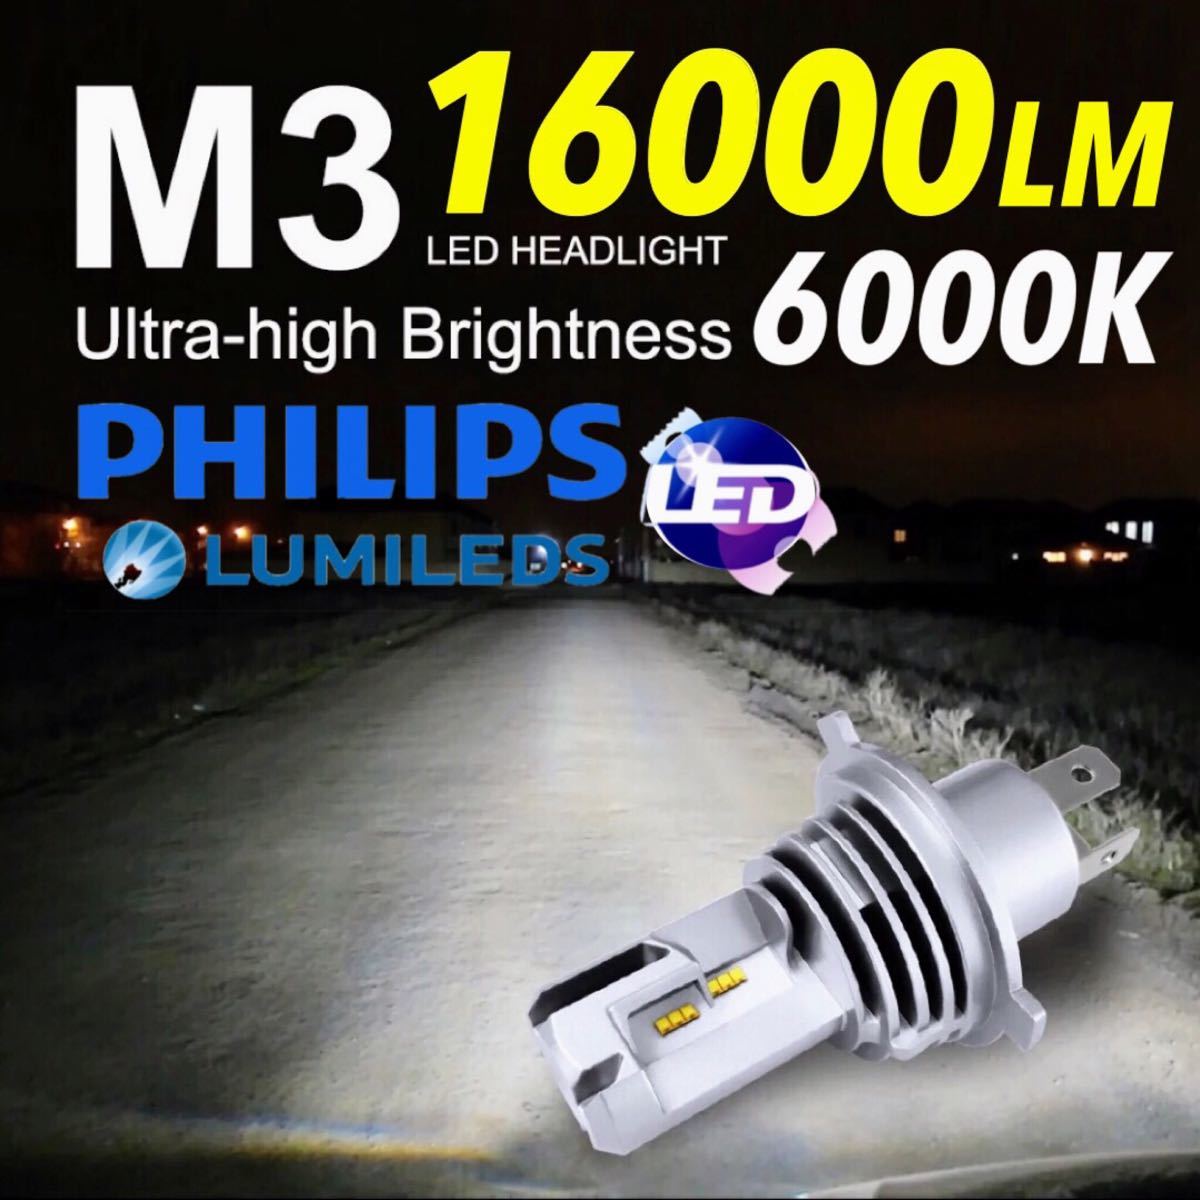 PHILIPS社製ZESチップ H4 LEDヘッドライト Hi/Lo 16000LM 12V24V 新車検対応 明るい 車バイク用